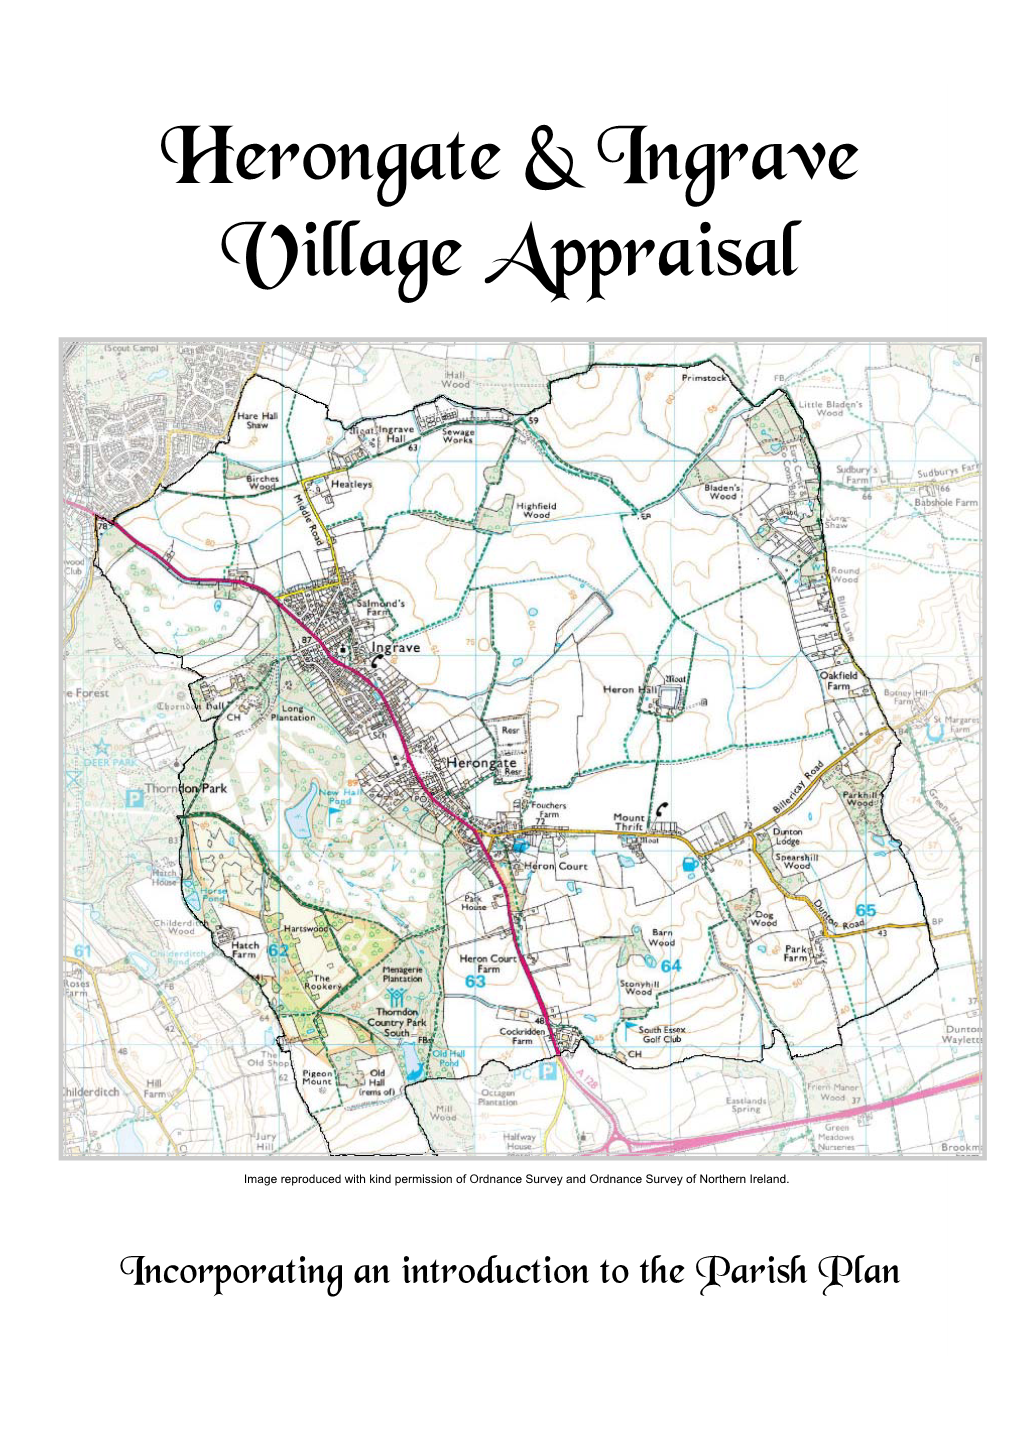 06 08 08 Village Appraisal Report